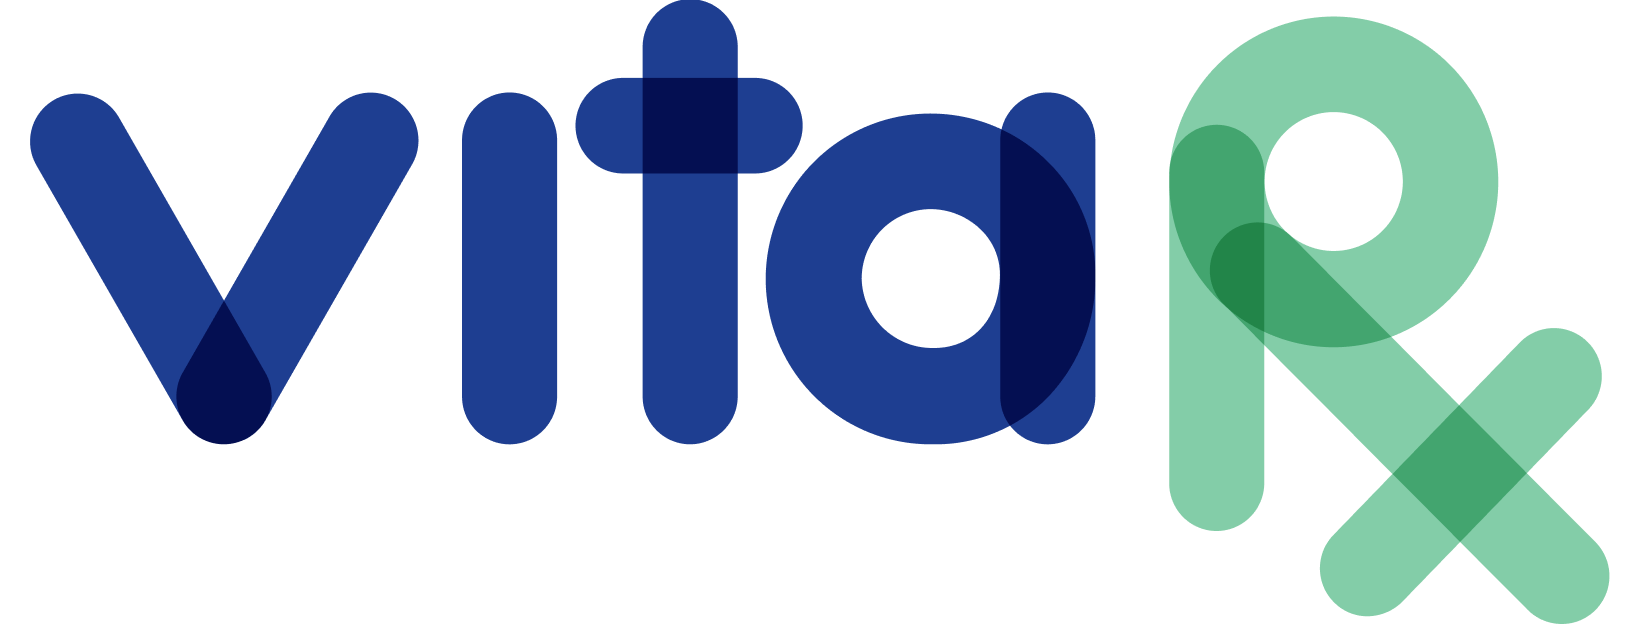 VitaRx logo